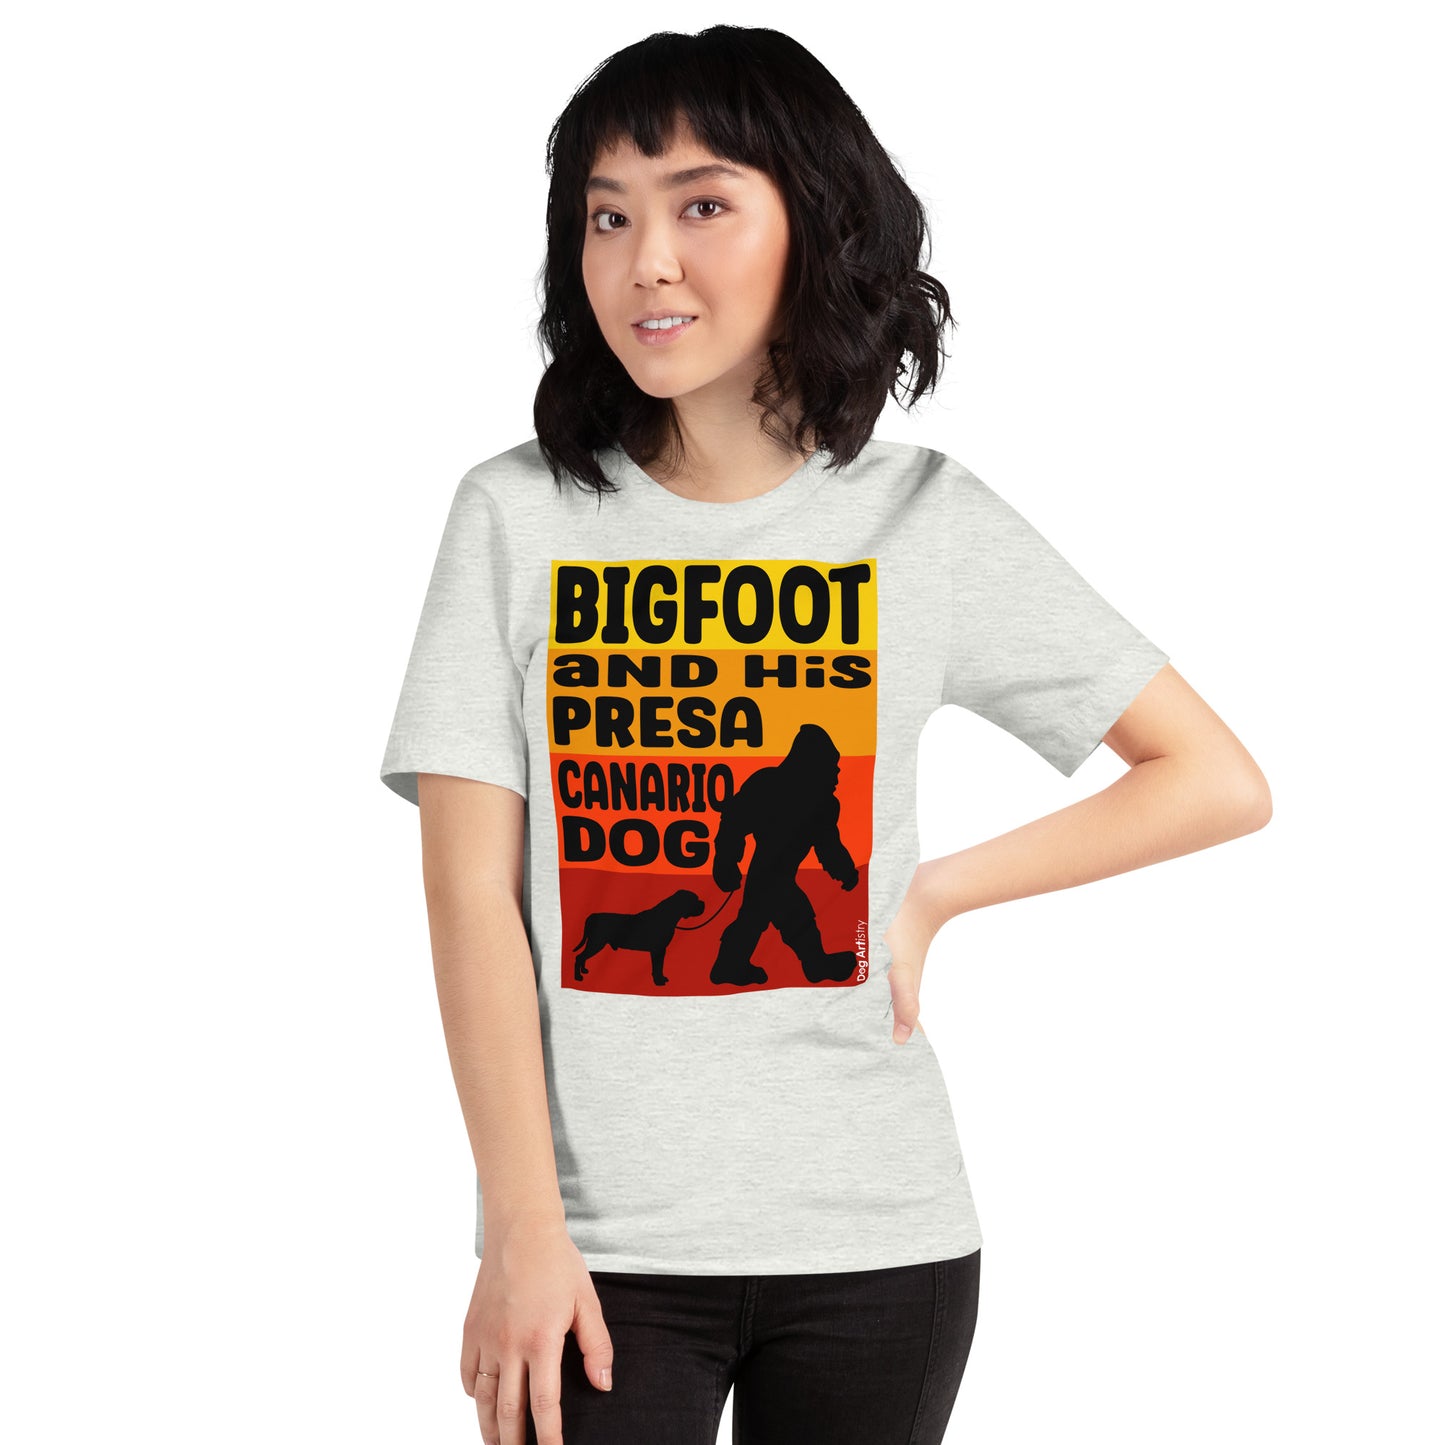 Bigfoot and his presa canario unisex ash t-shirt by Dog Artistry.